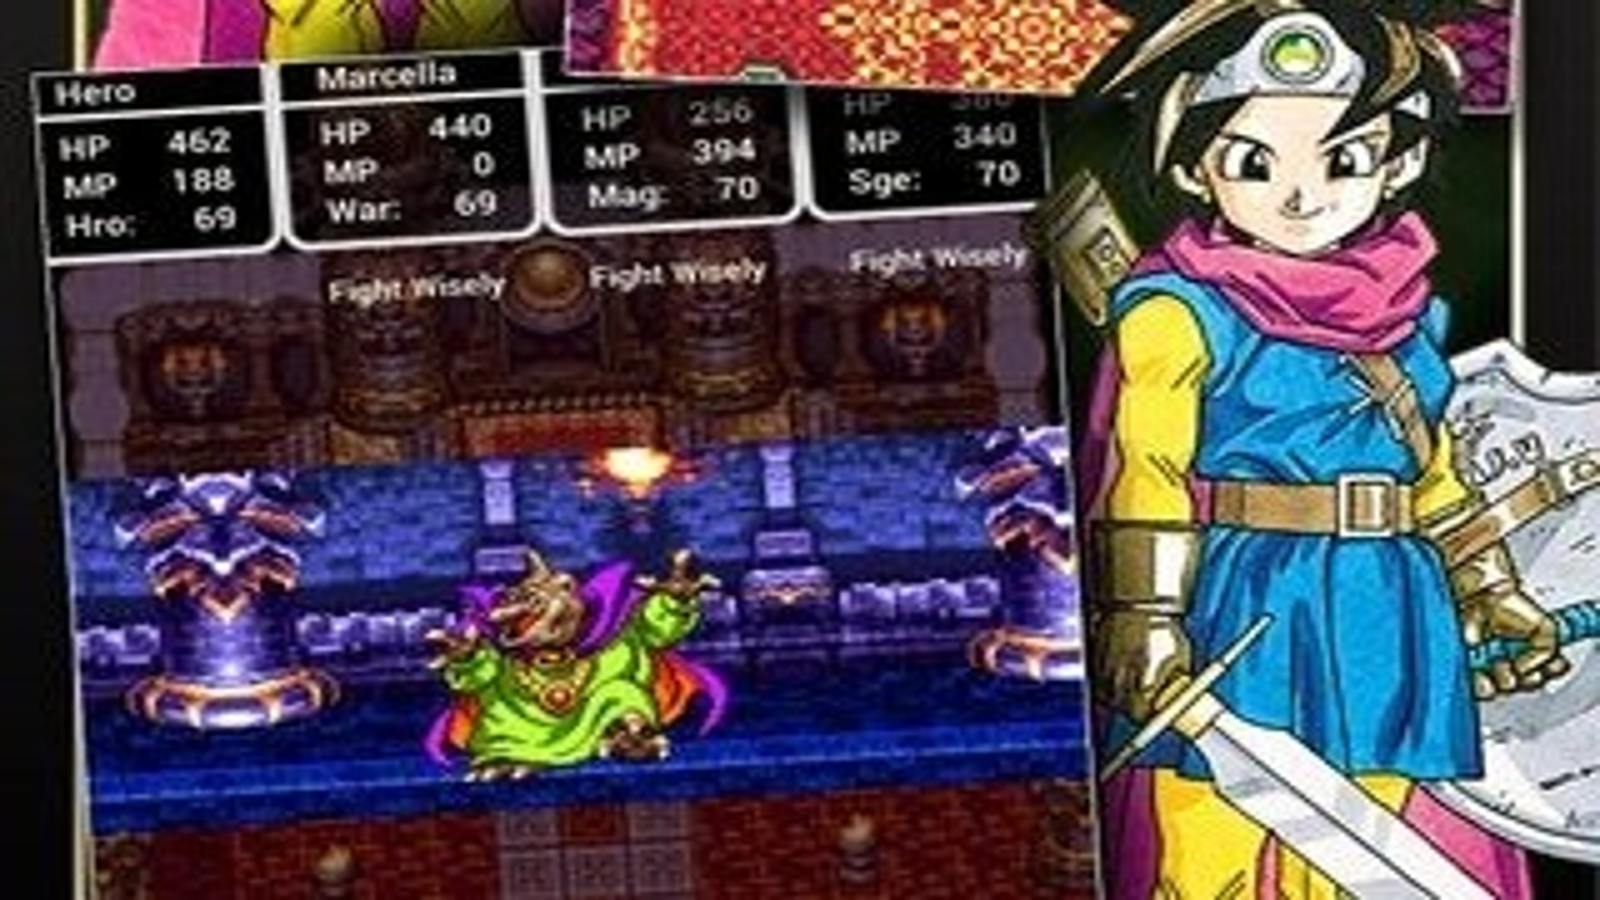 Video Game Dragon Quest V HD Wallpaper